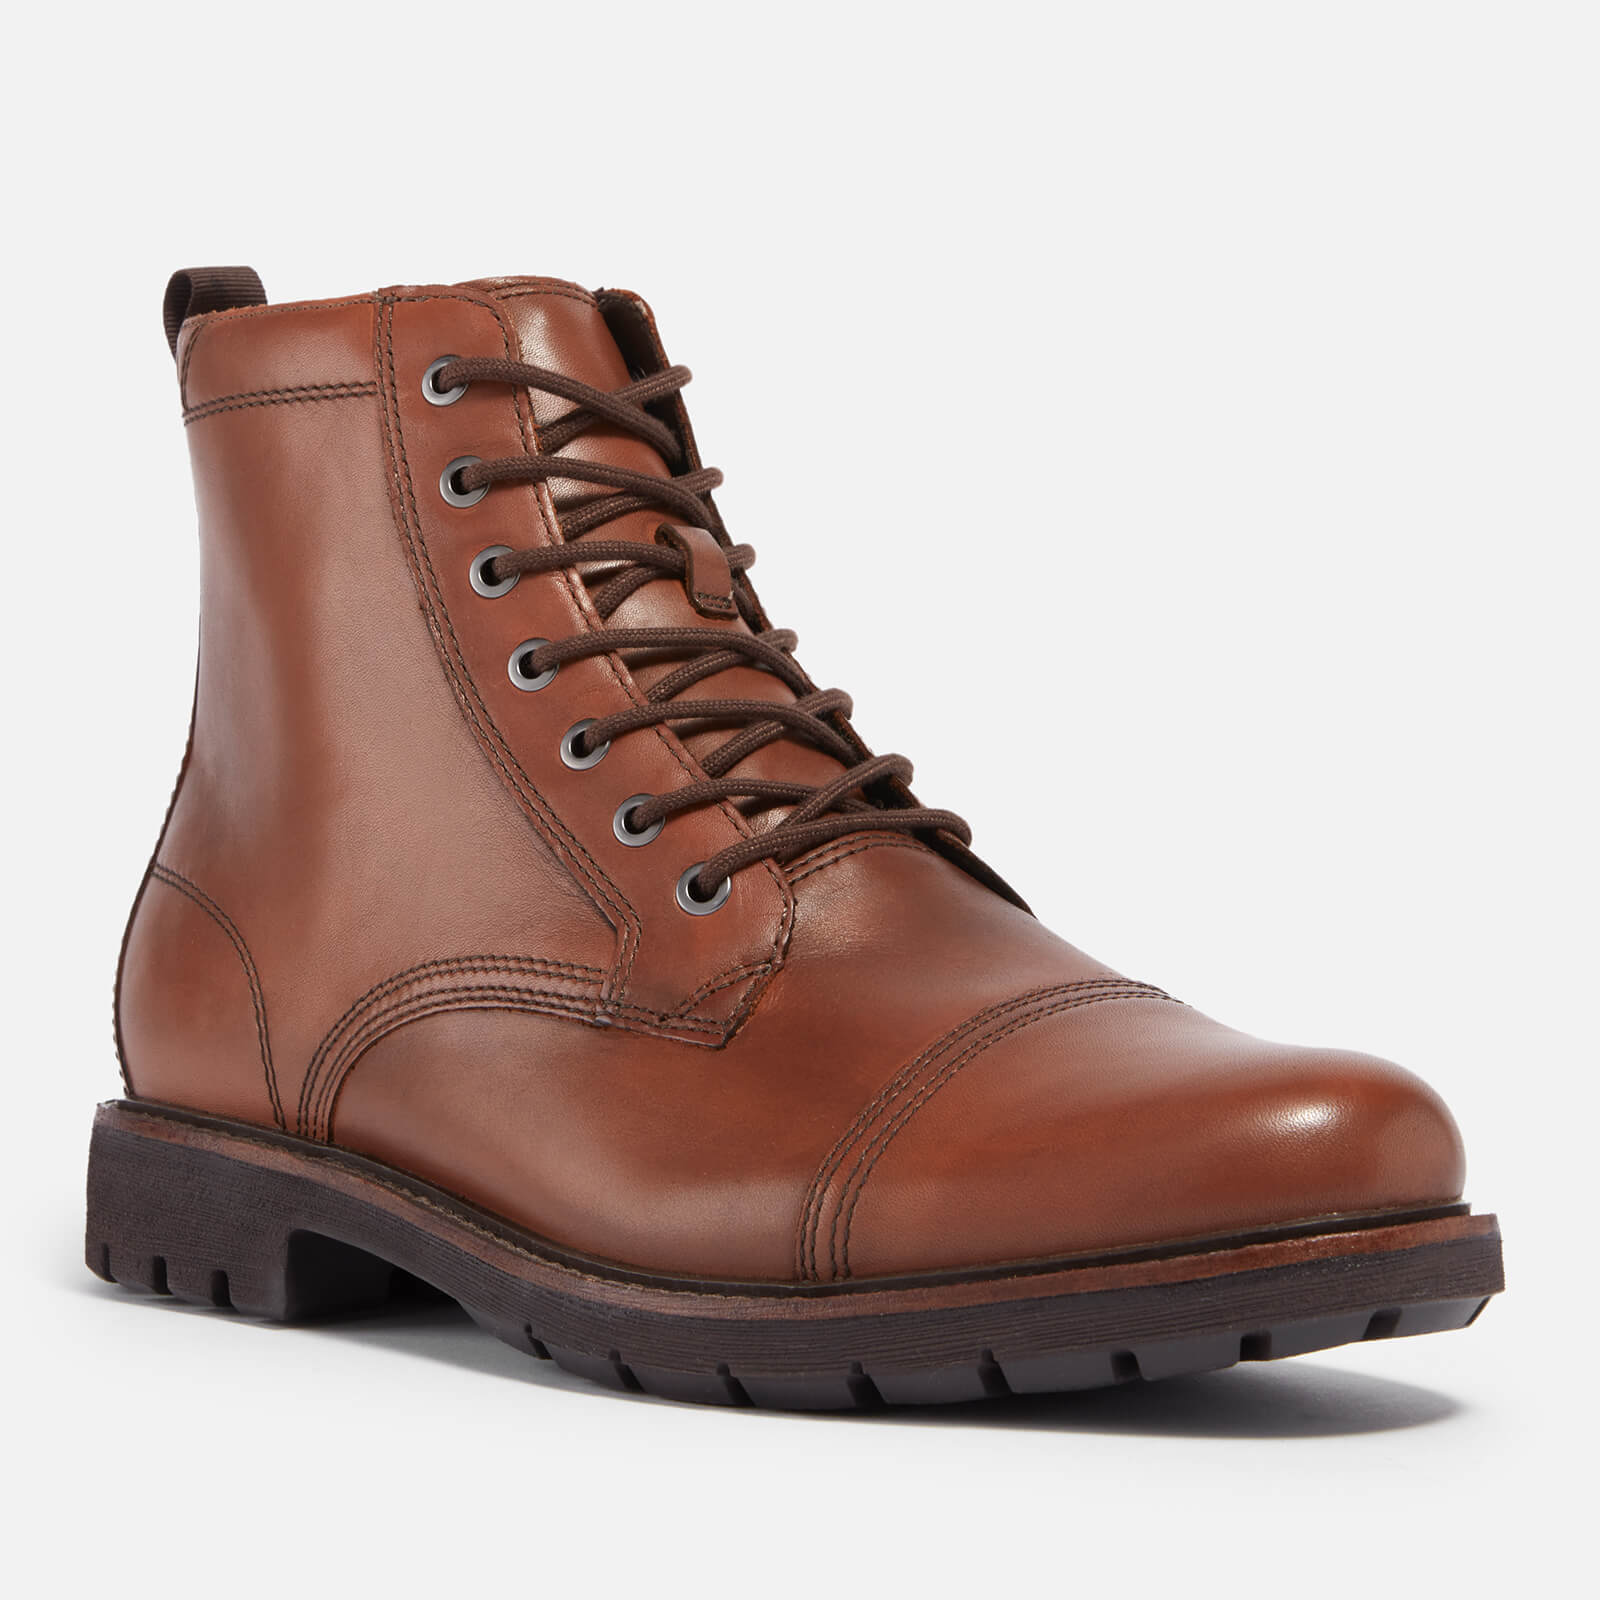 clarks men's batcombe cap leather boots - uk 7